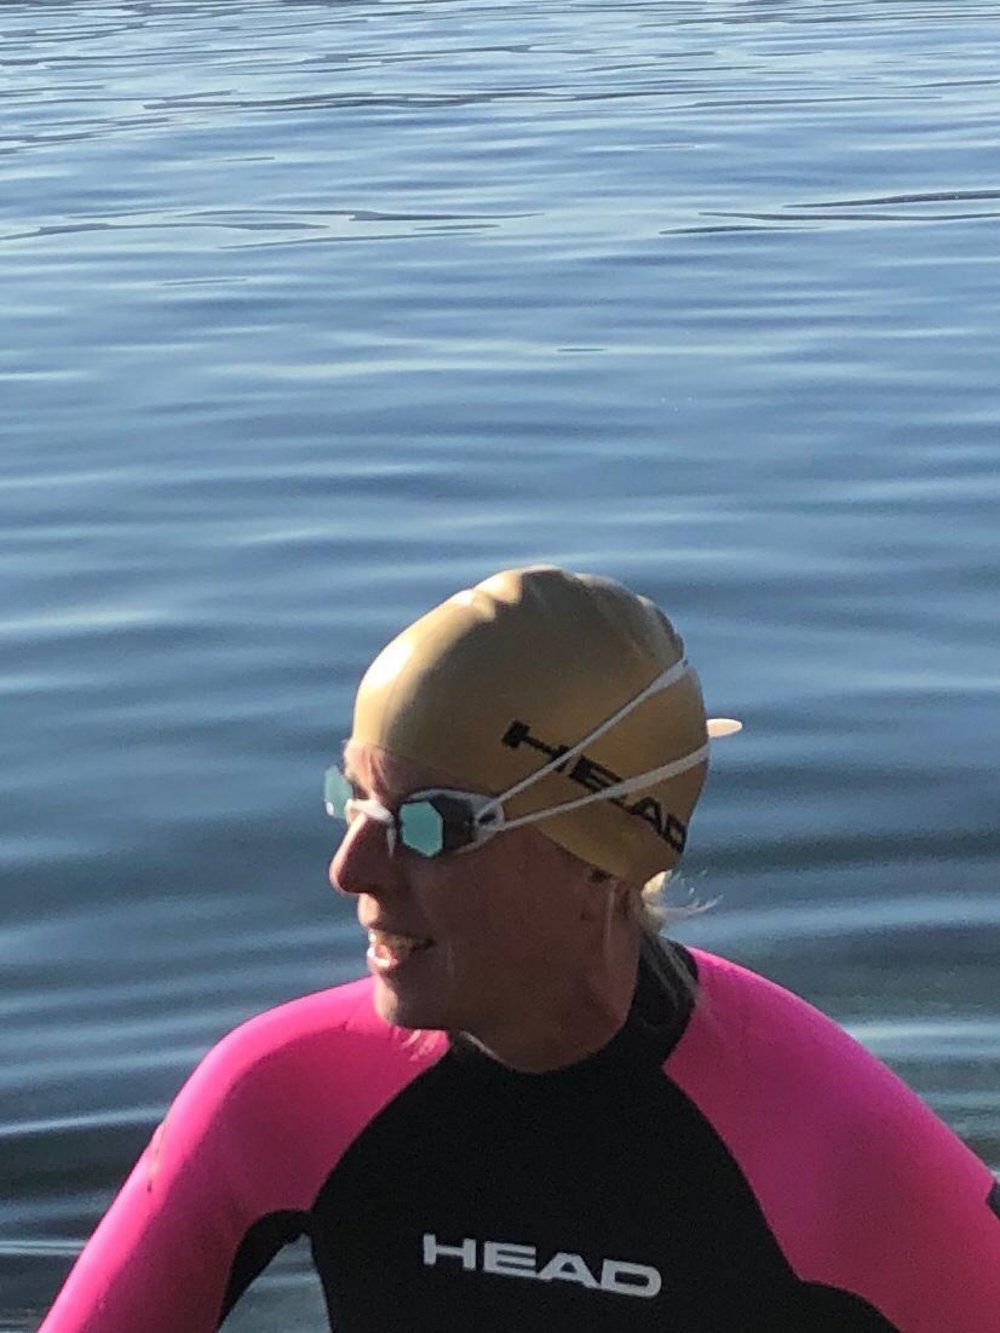 TSK HEAD Diamond swimming goggles in open water use